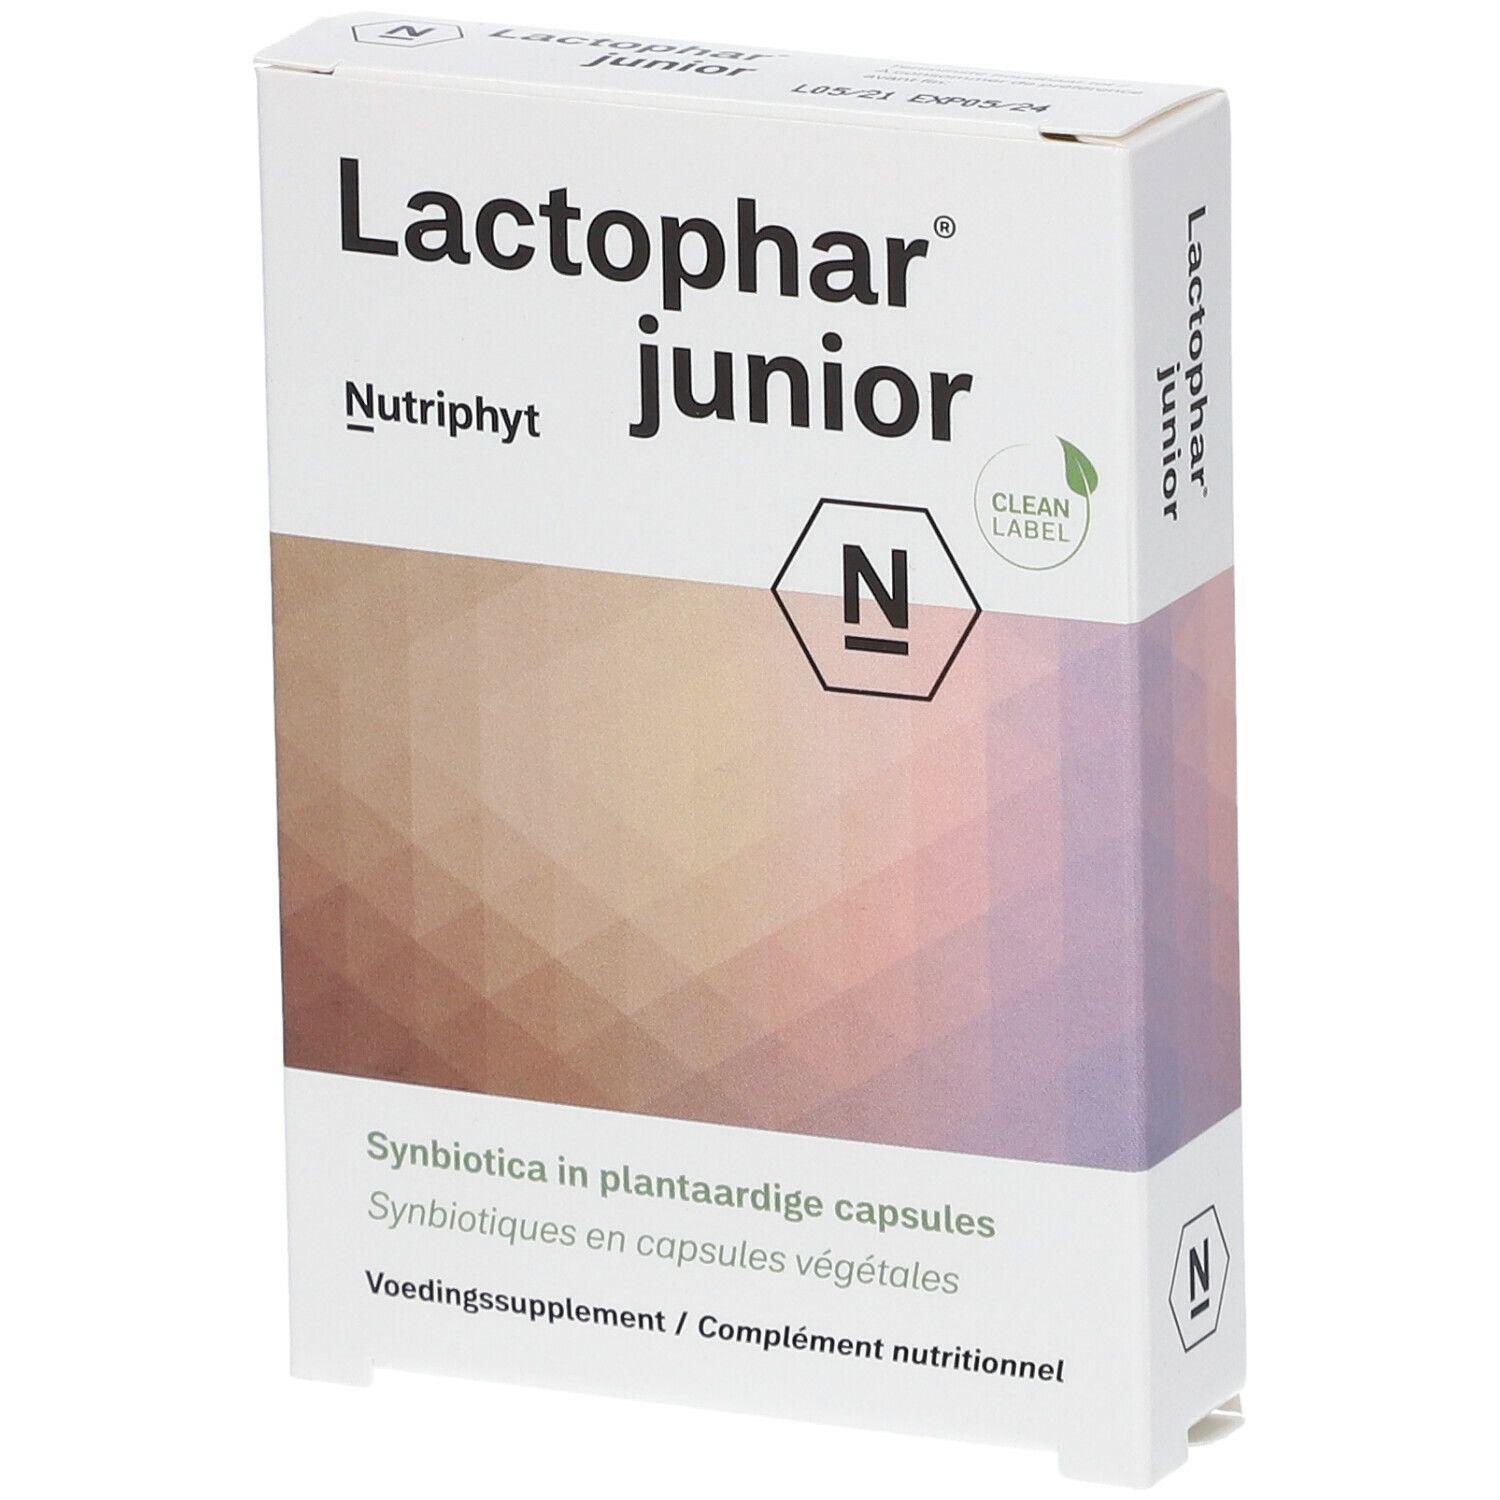 Image of Lactophar® junior